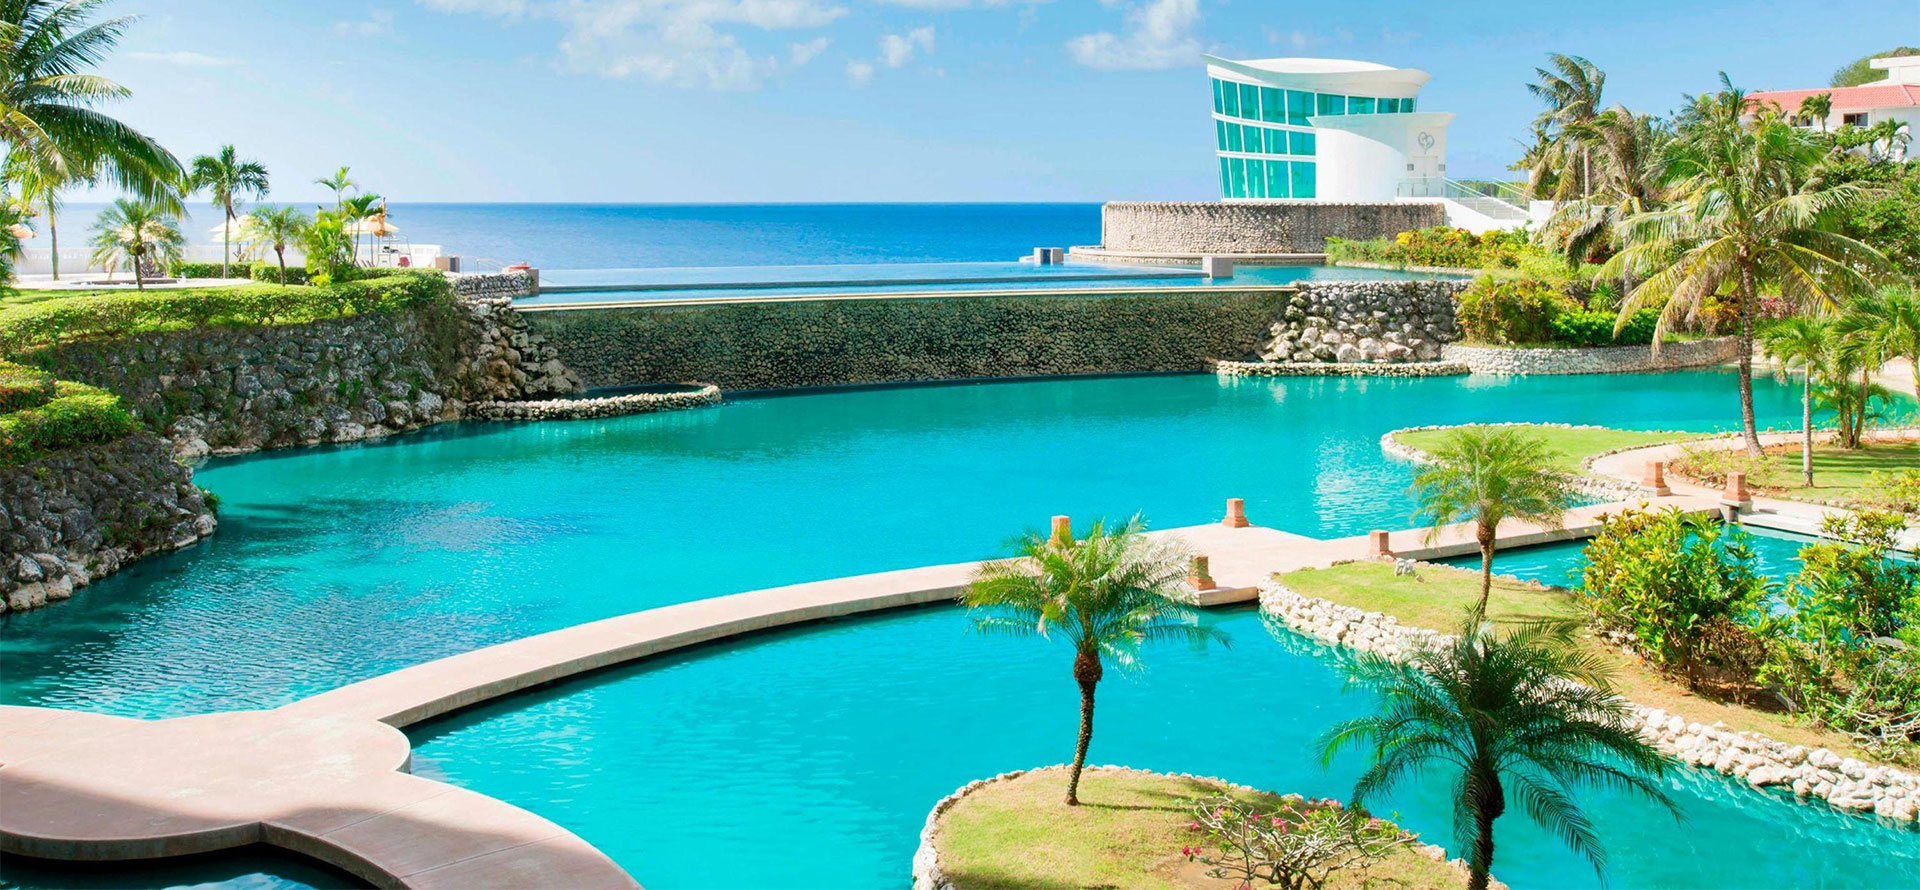 All inclusive resort in Guam.